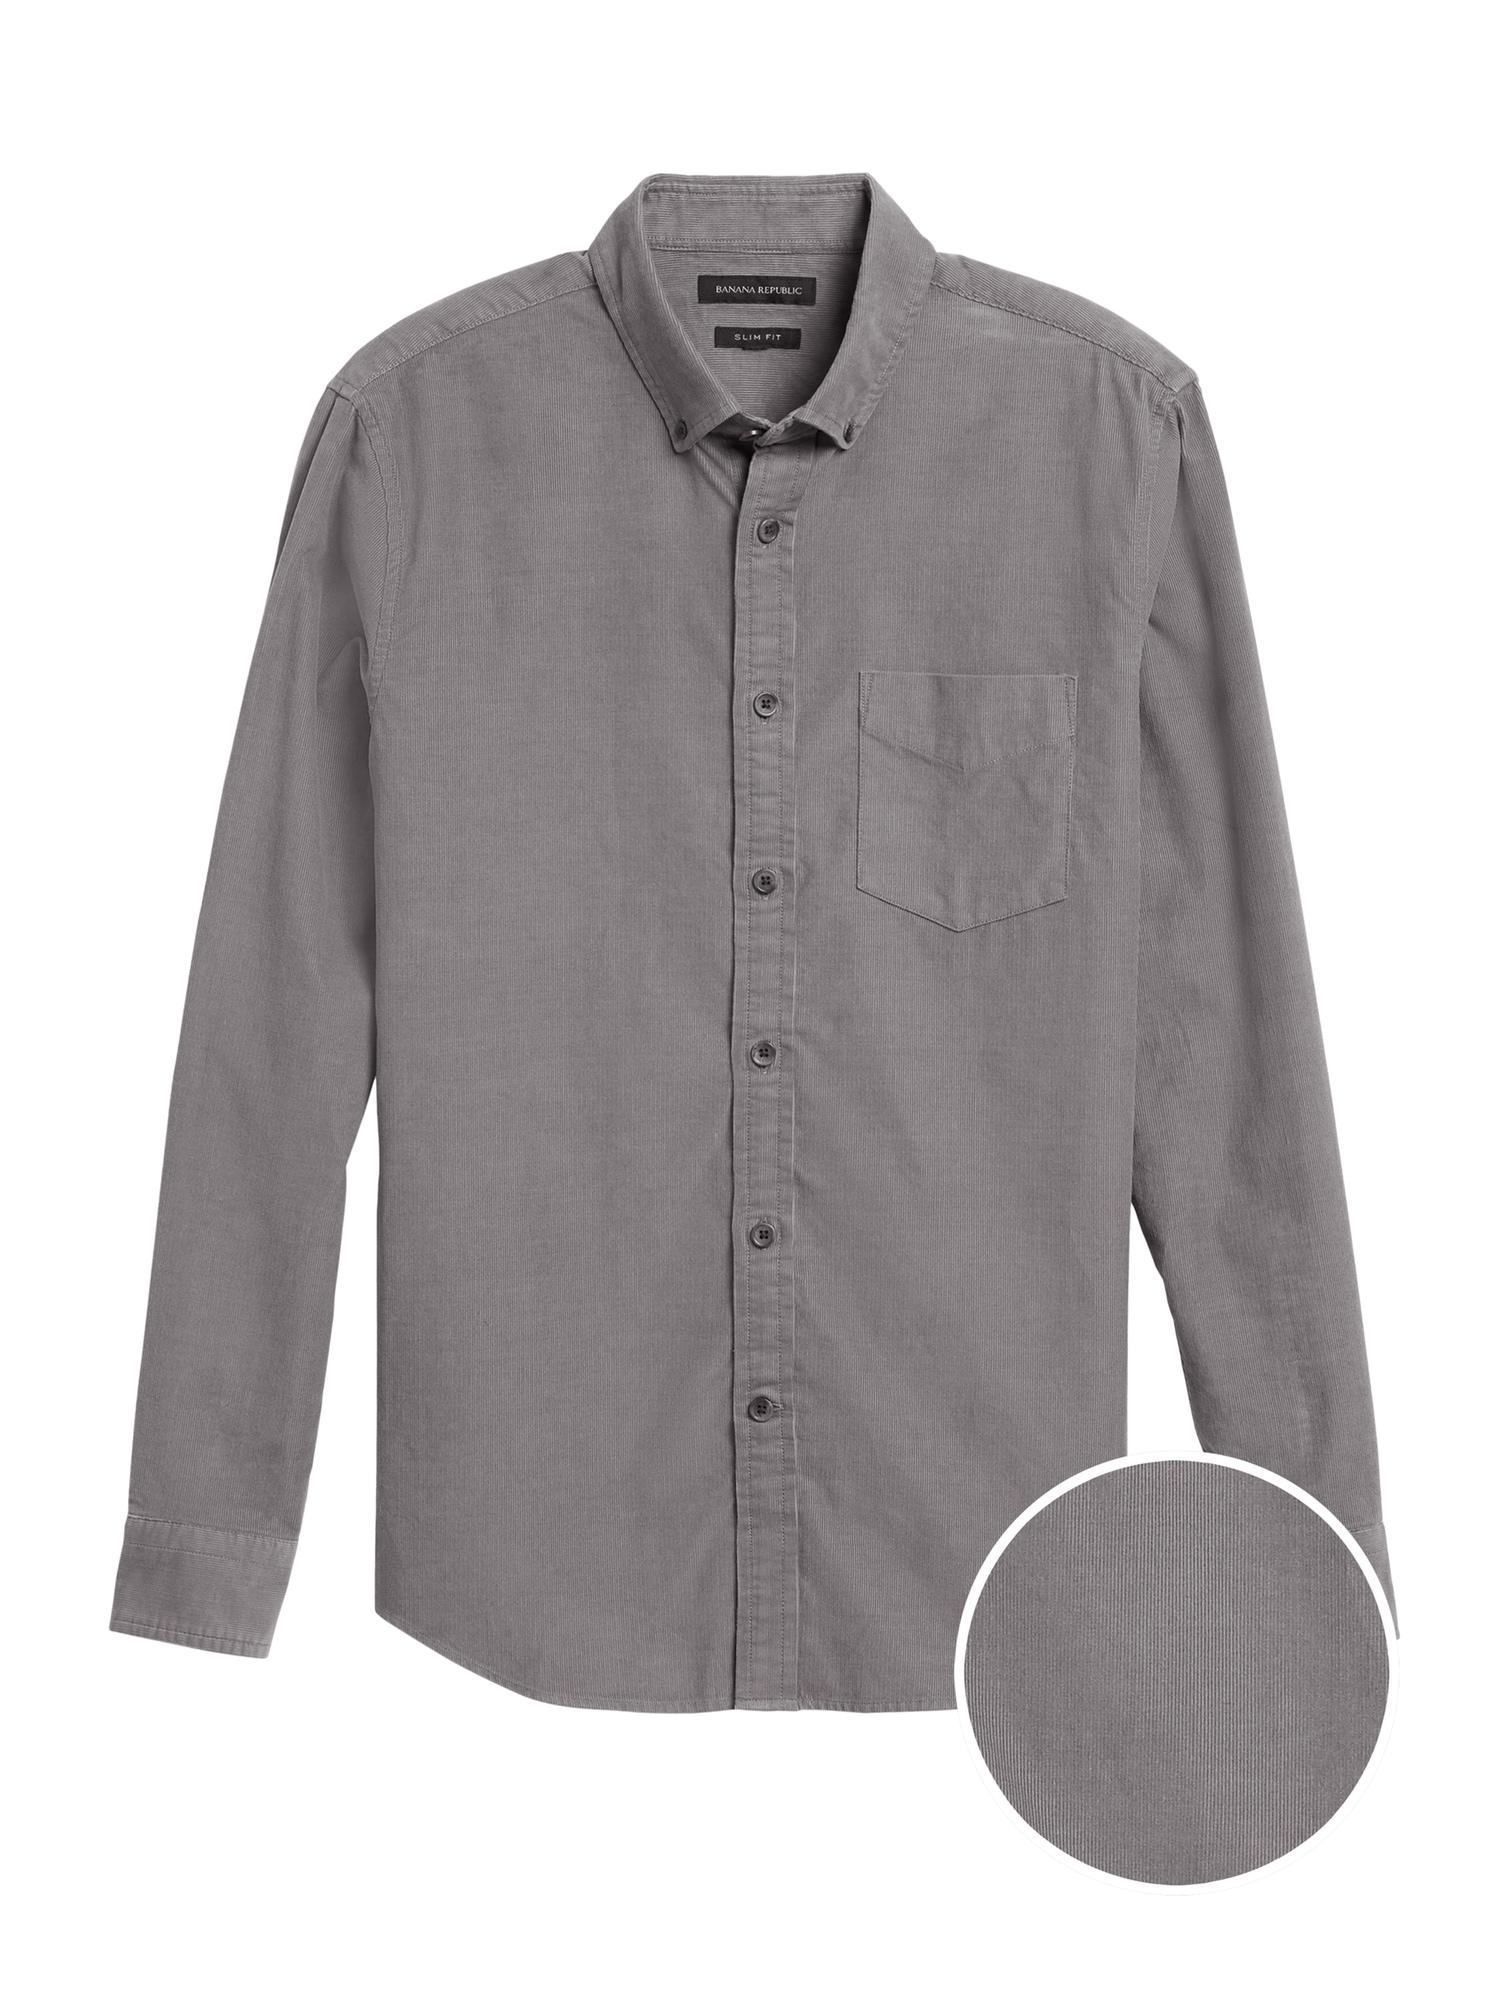 Banana Republic Slim-fit Corduroy Shirt in Gray for Men - Lyst